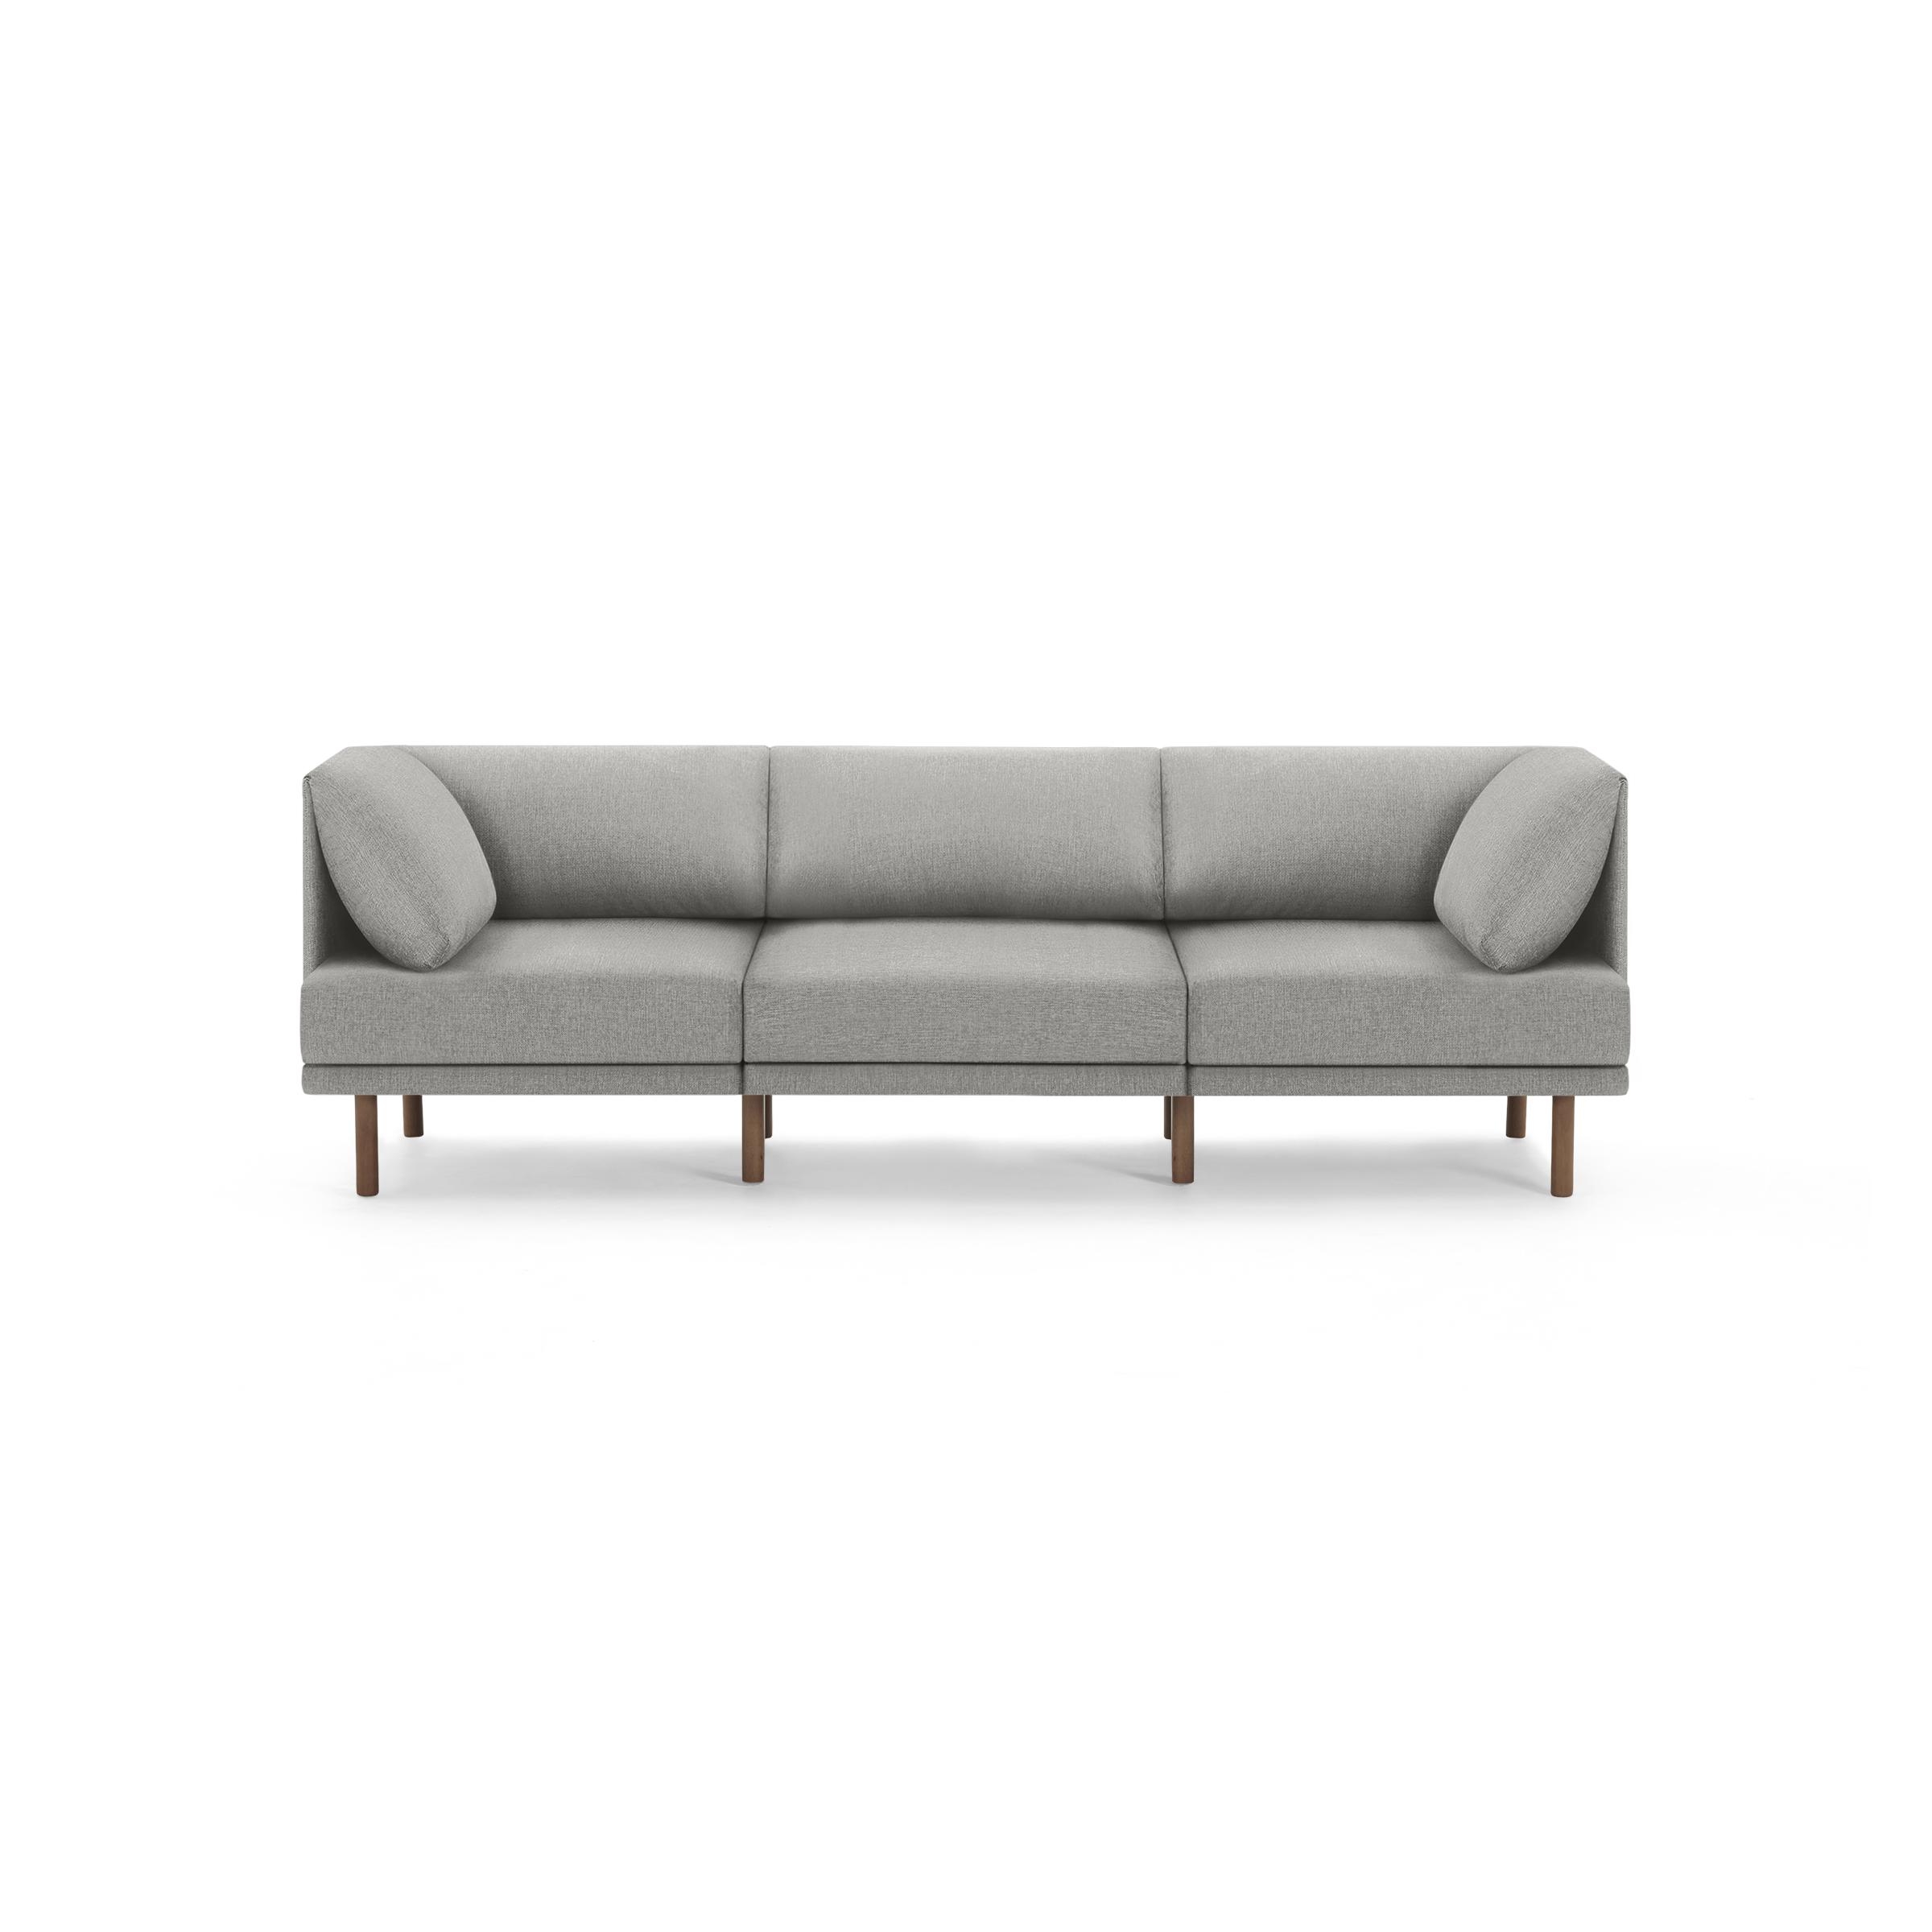 The Range 3-Piece Sofa in Stone Gray, Walnut Legs - Image 0